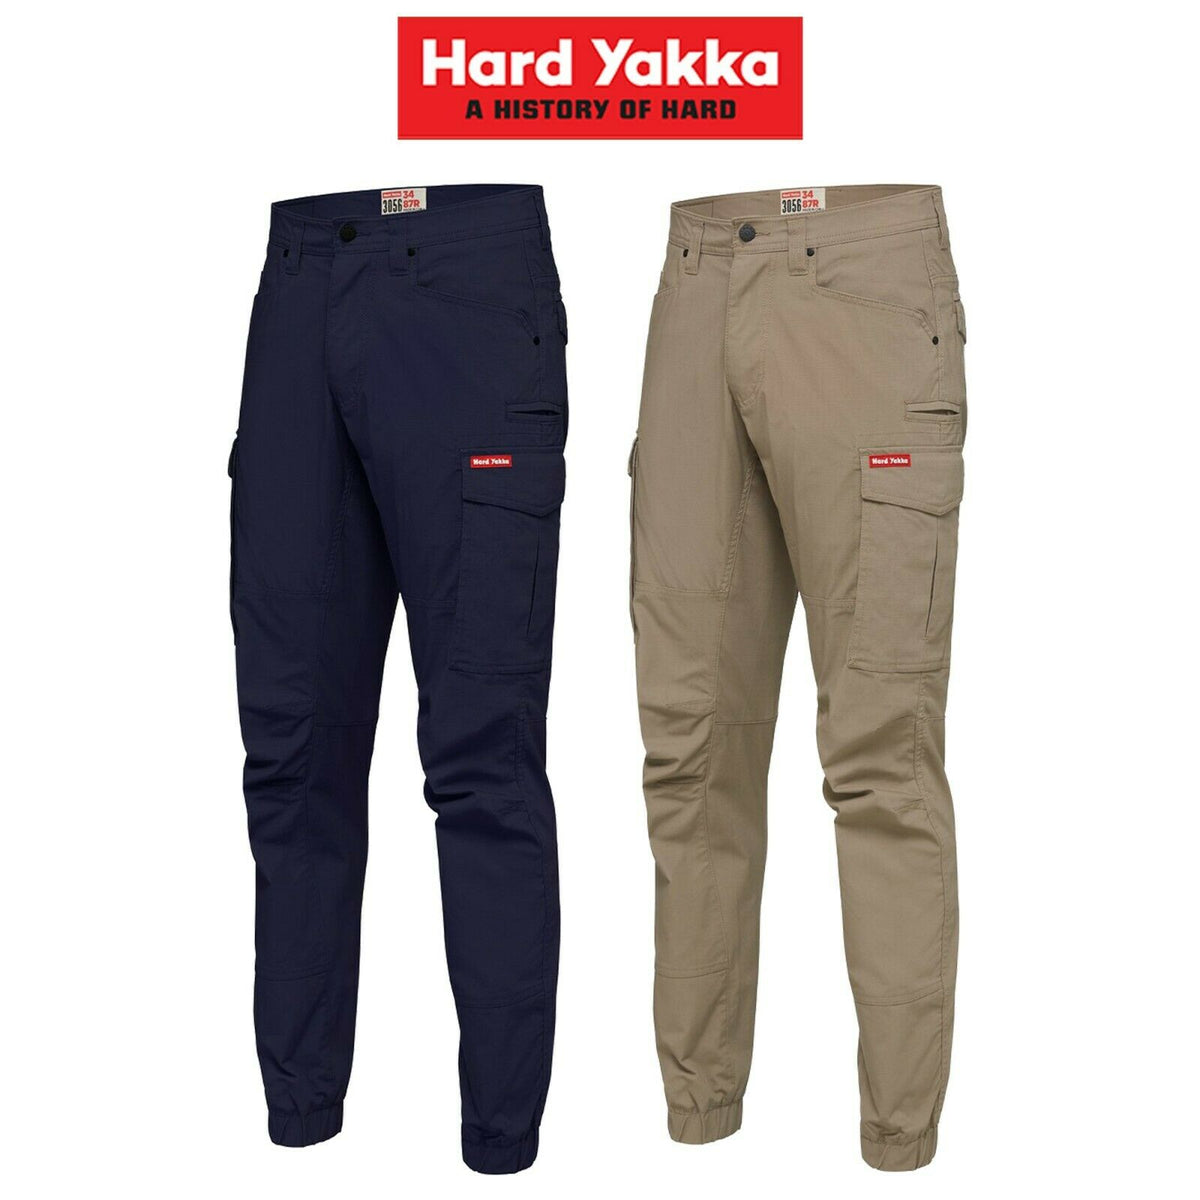 Hard Yakka Pants Cuff 3056 Ripstop Cargo Stretch Slim Fit Y02340